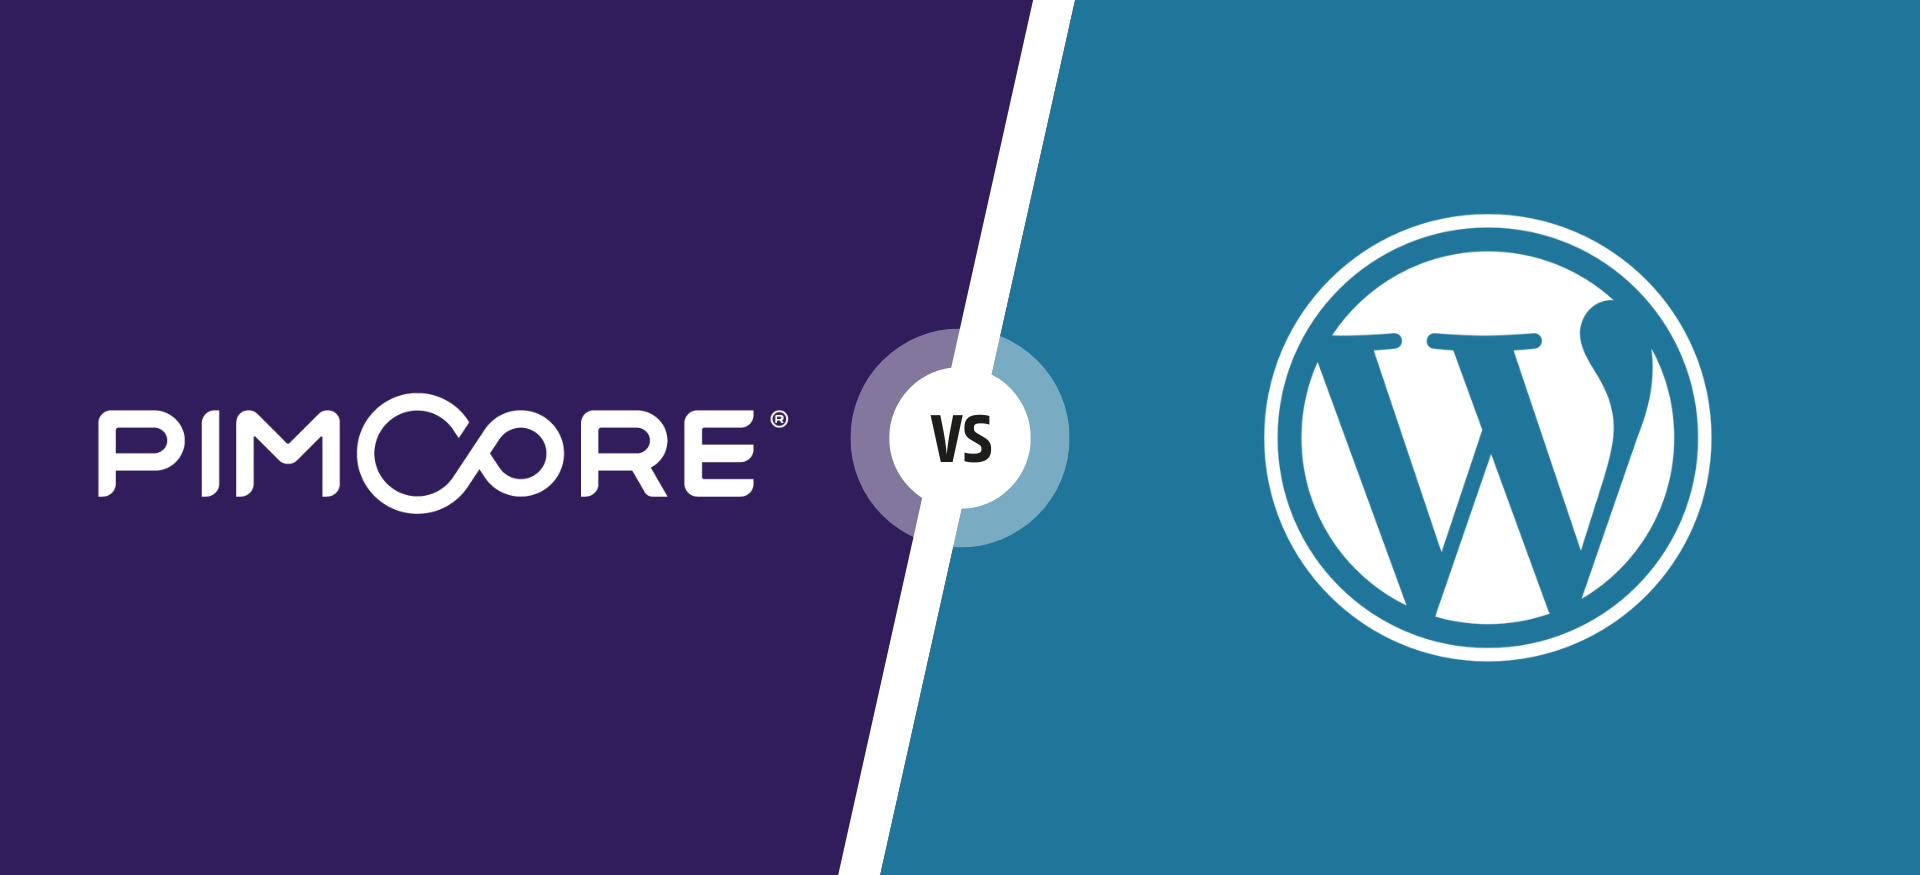 Pimcore vs WordPress: Which Platform Reigns Supreme?